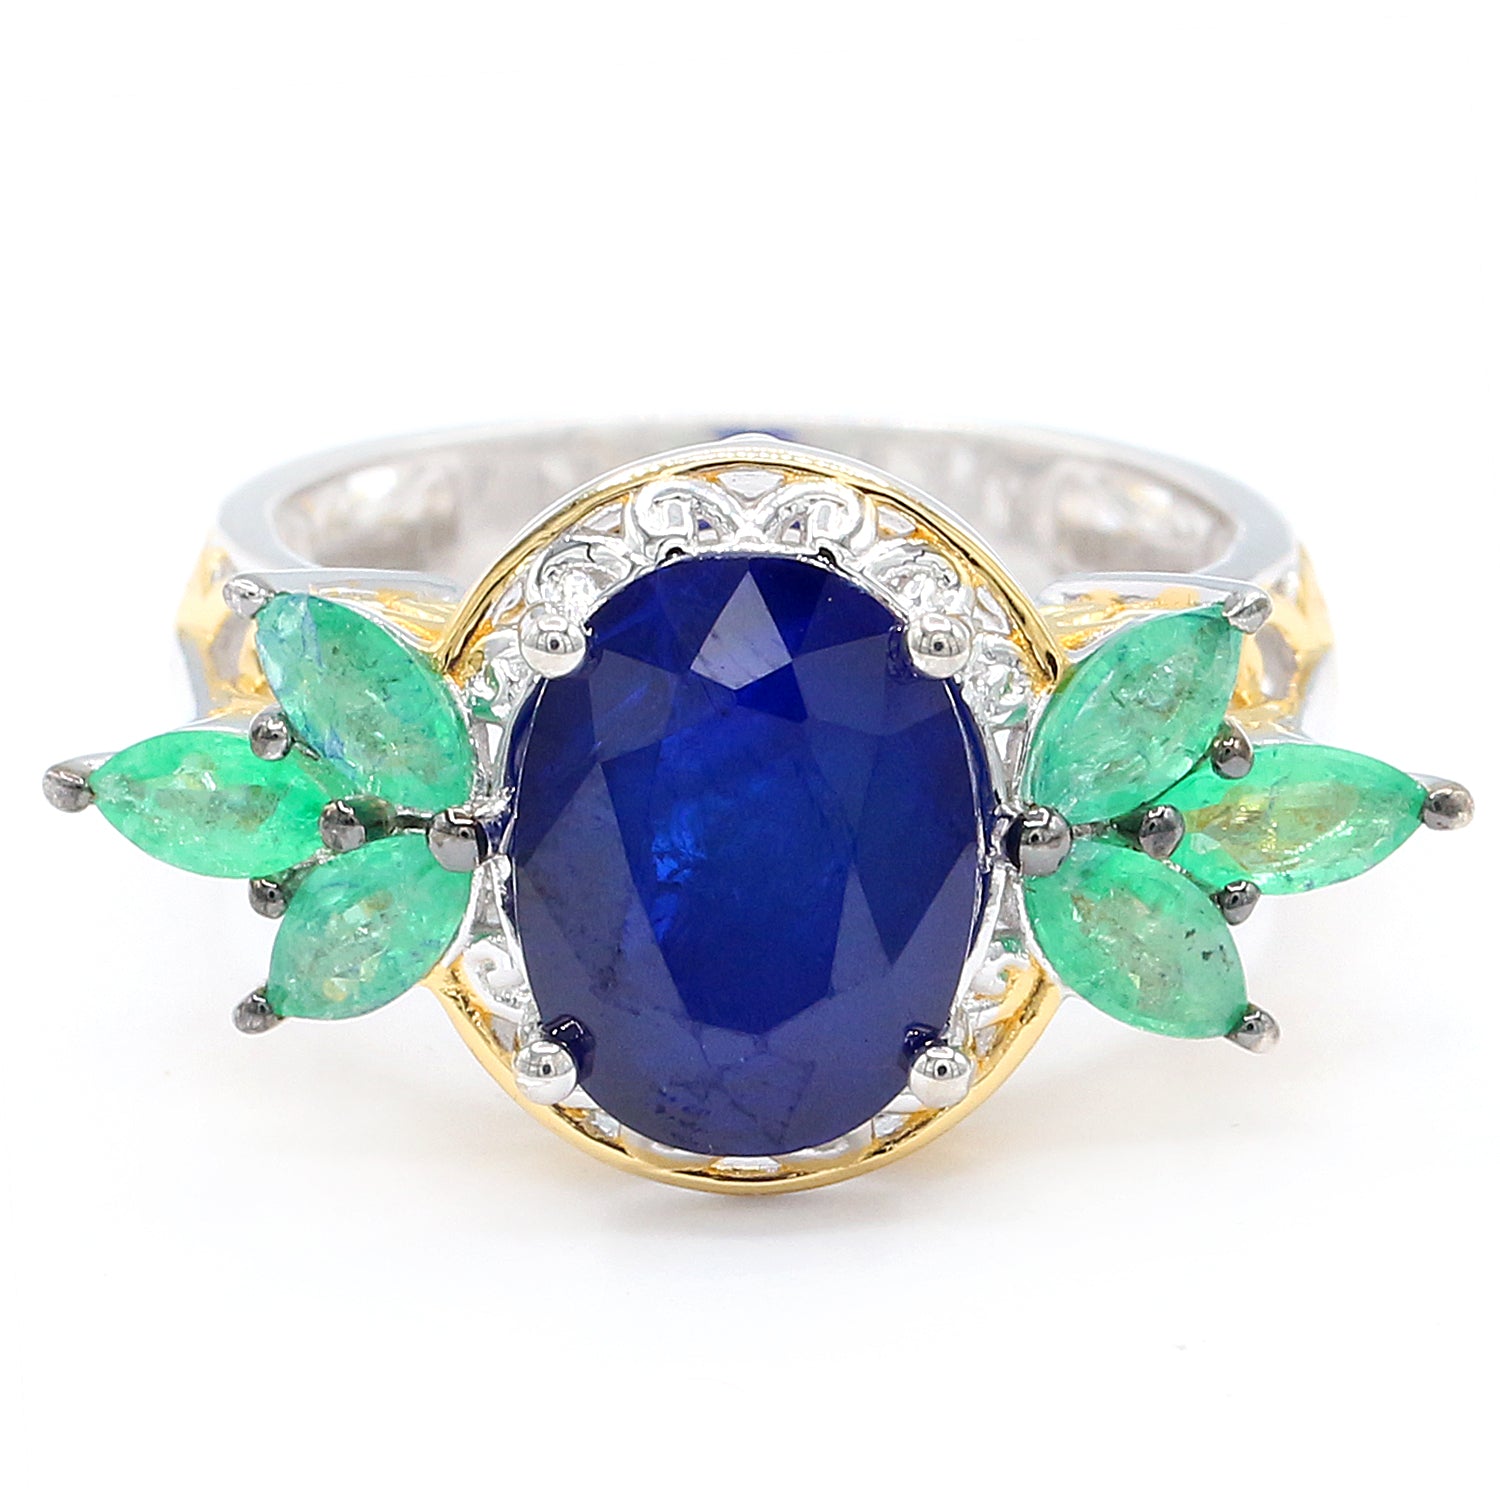 Limited Edition Gems en Vogue 5.96ctw Cobalt Blue Spinel & Grizzly Emerald Ring